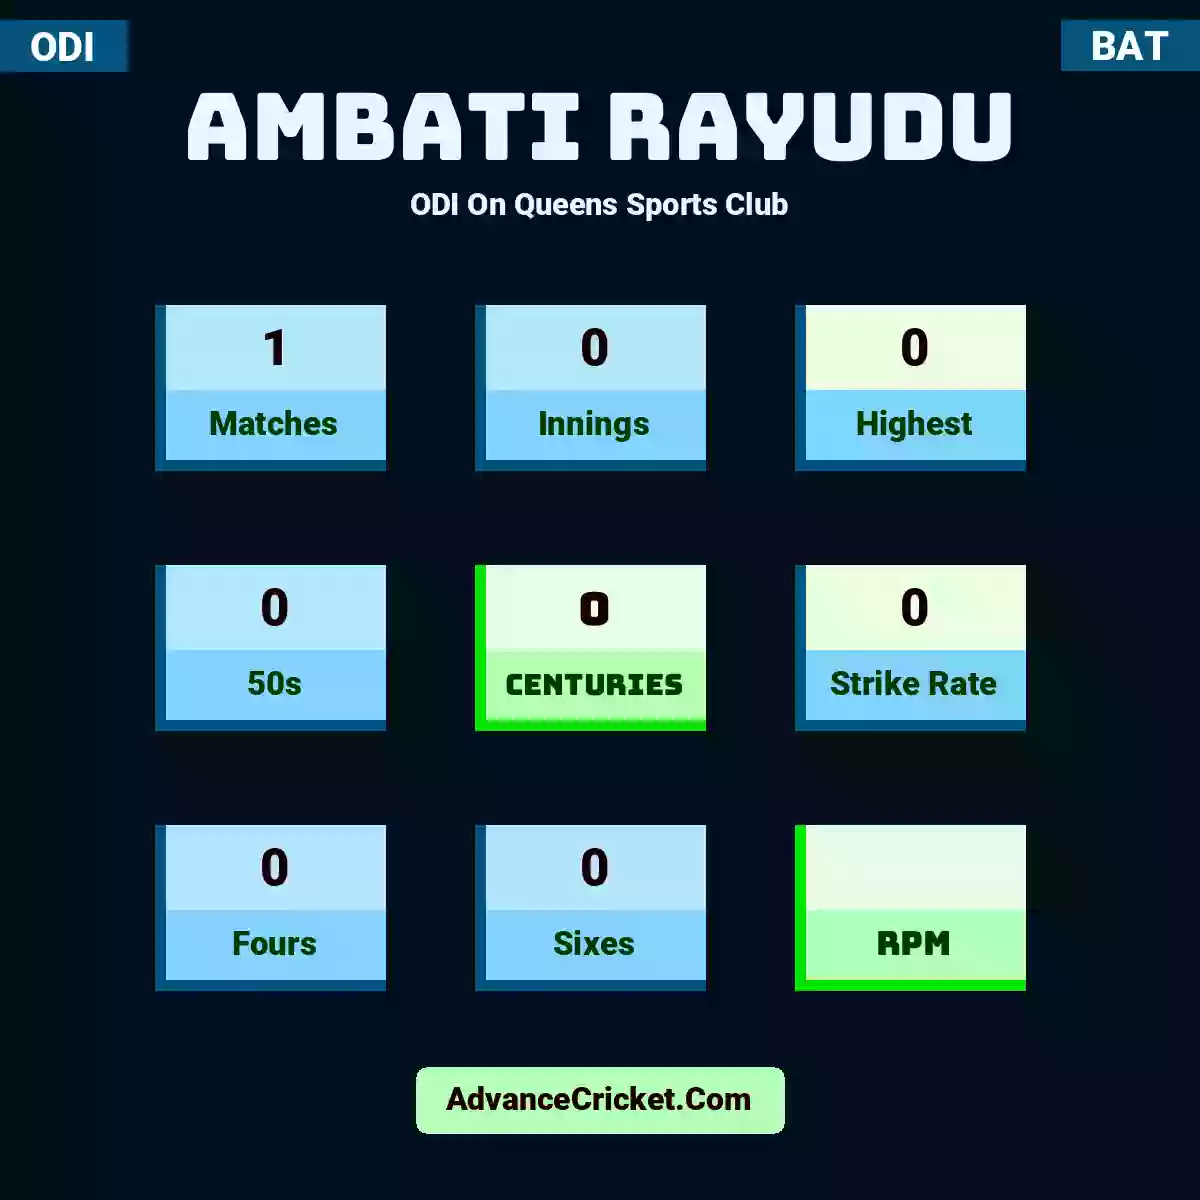 Ambati Rayudu ODI  On Queens Sports Club, Ambati Rayudu played 1 matches, scored 0 runs as highest, 0 half-centuries, and 0 centuries, with a strike rate of 0. A.Rayudu hit 0 fours and 0 sixes.